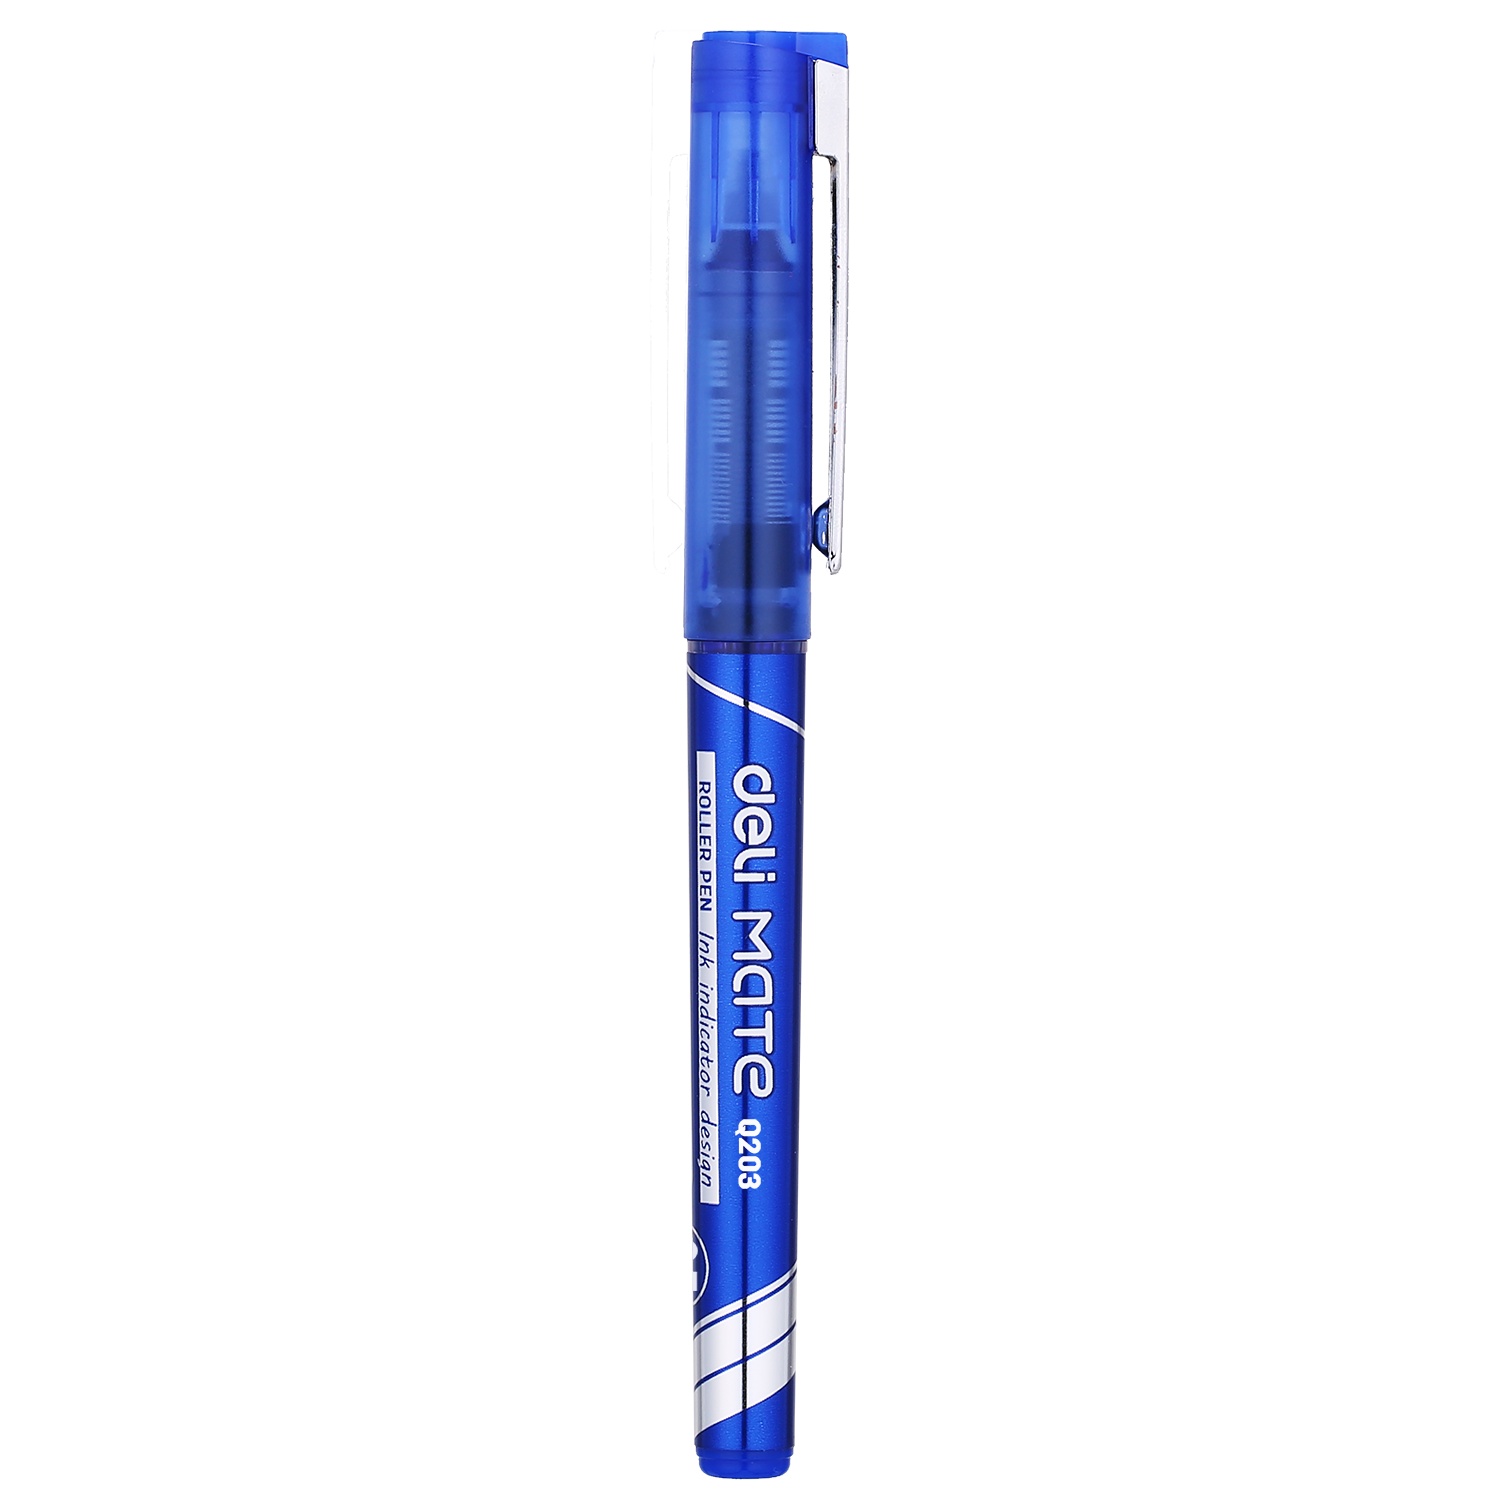 EQ20330 Roller Pen